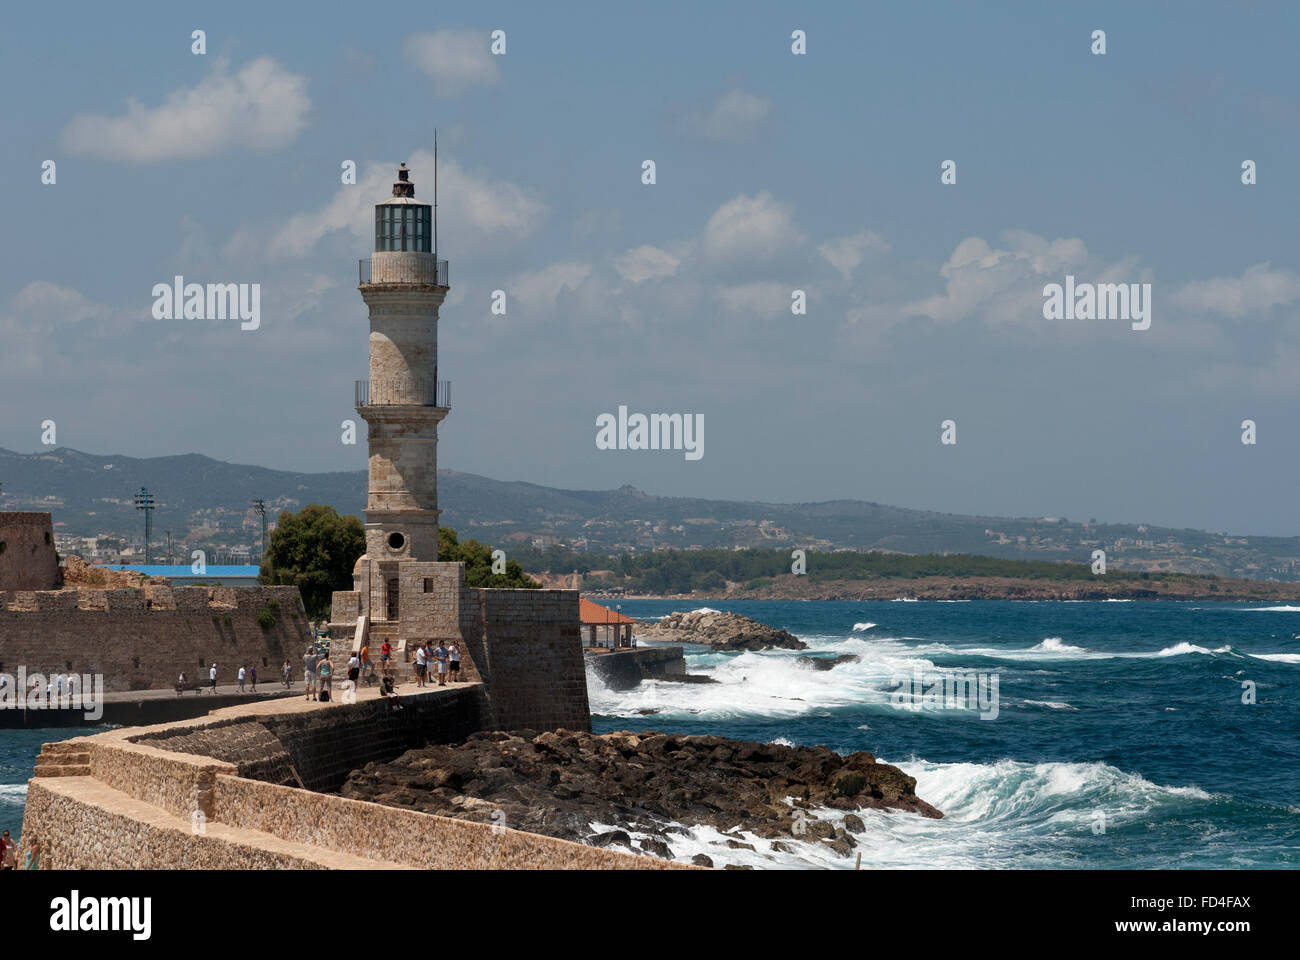 Venetian Lighthouse Chania Harbour Stock Photo